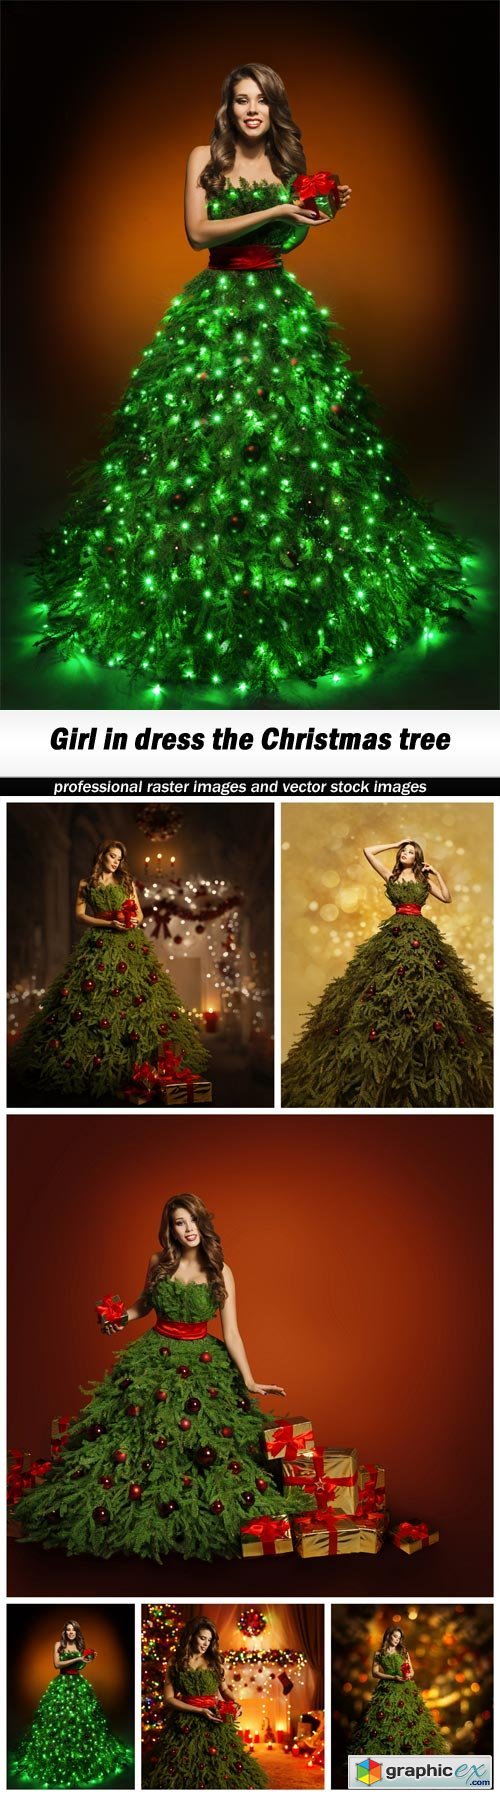 Girl in dress the Christmas tree - 6 UHQ JPEG